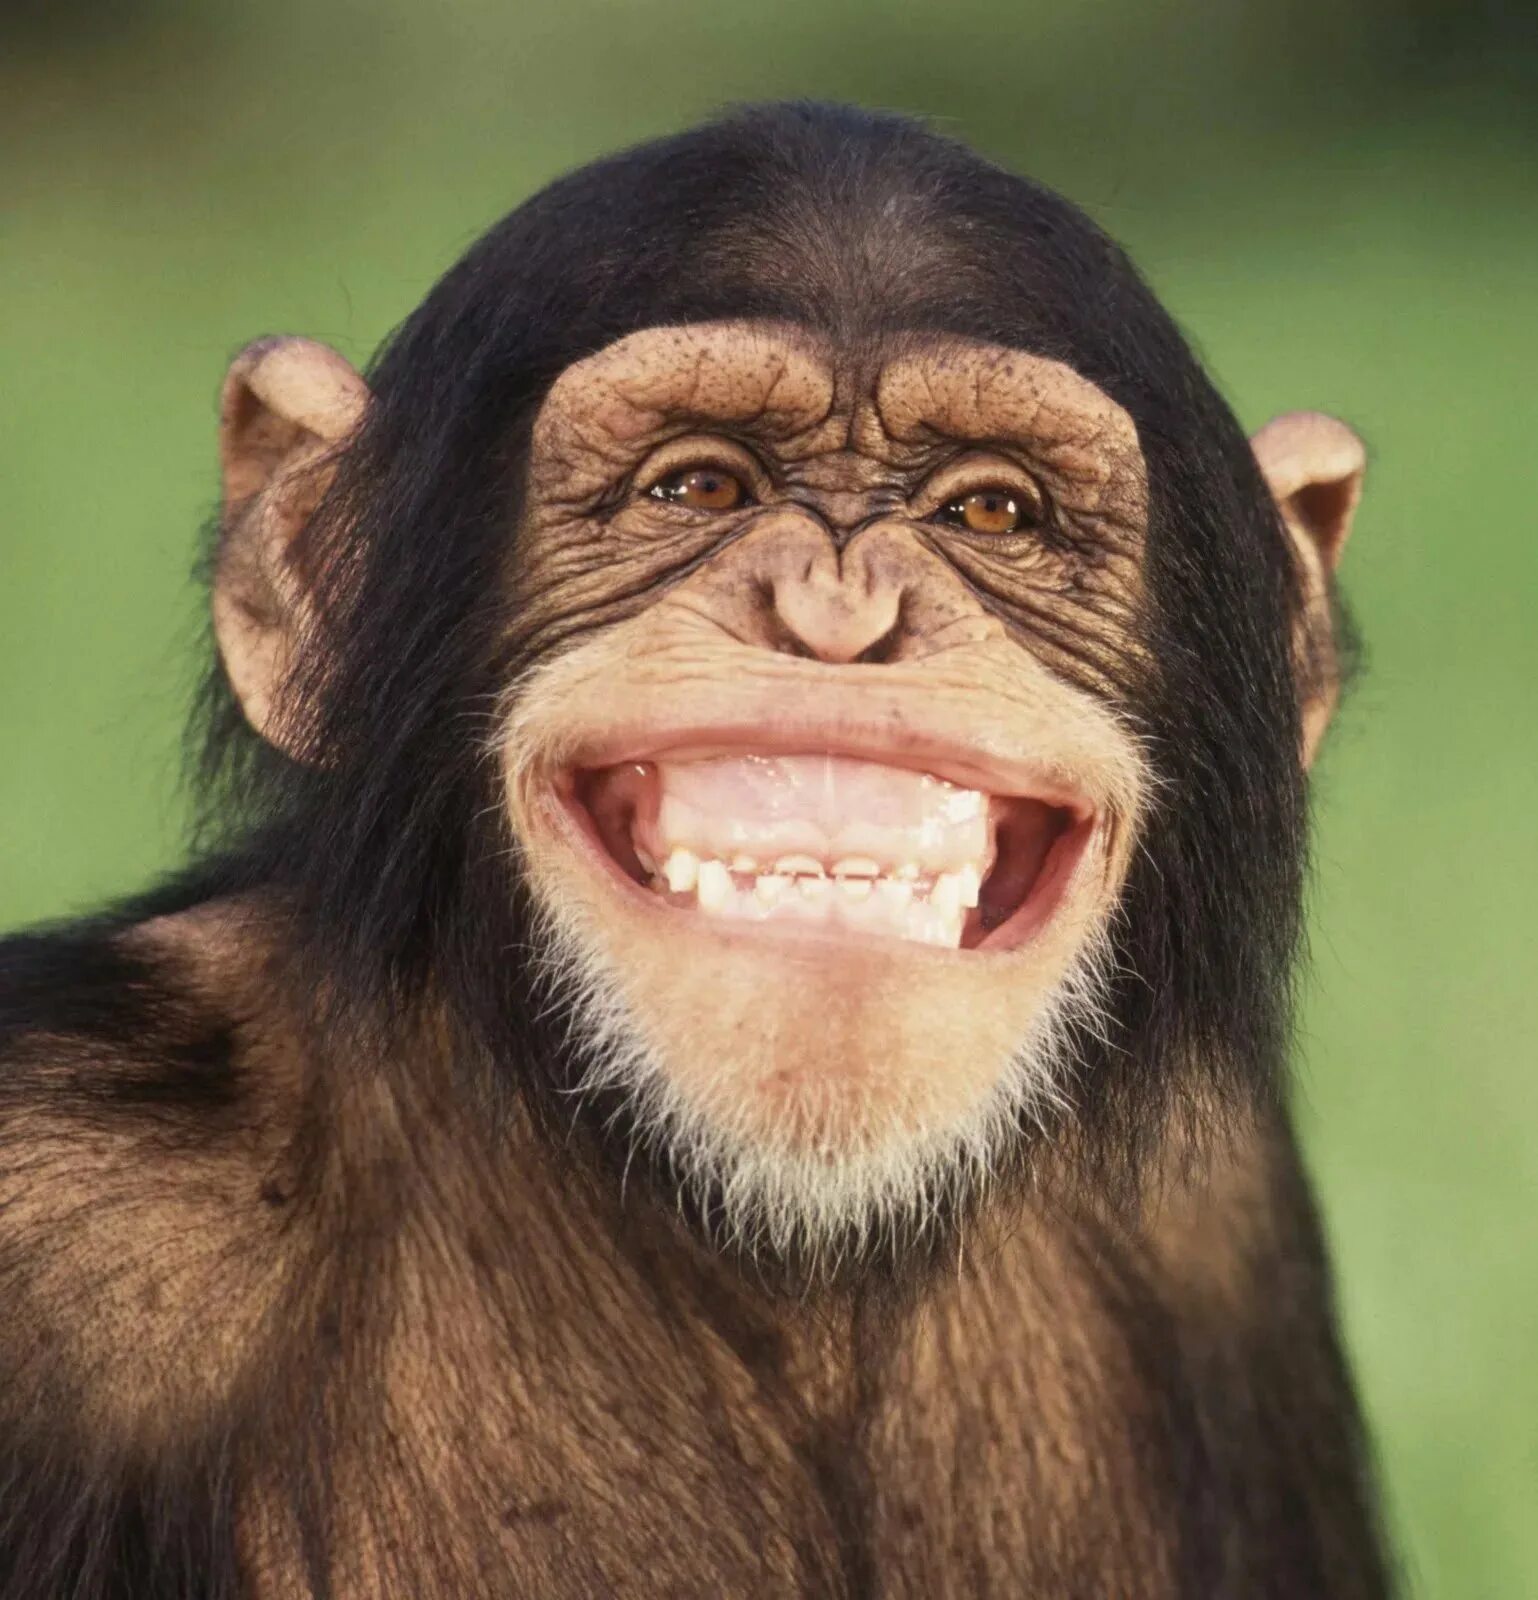 Animals emotions. Улыбка шимпанзе. Обезьяна улыбается. Шимпанзе улыбается. Мартышка улыбается.